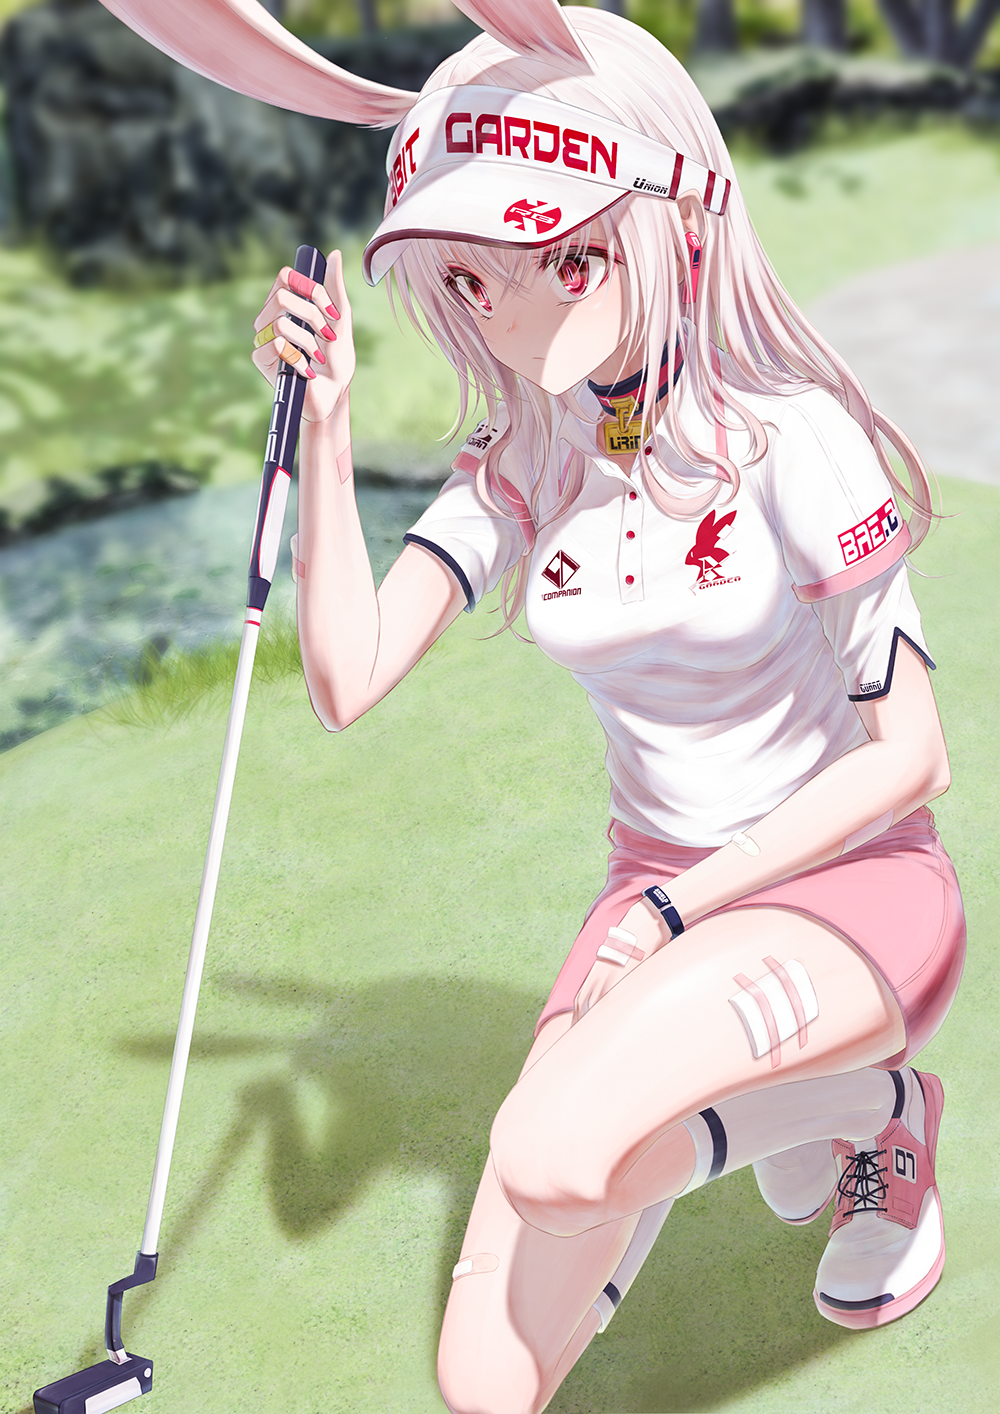 Anime 1000x1414 anime anime girls digital art artwork 2D portrait display Bae.C animal ears bunny girl silver hair red eyes golf club sportswear